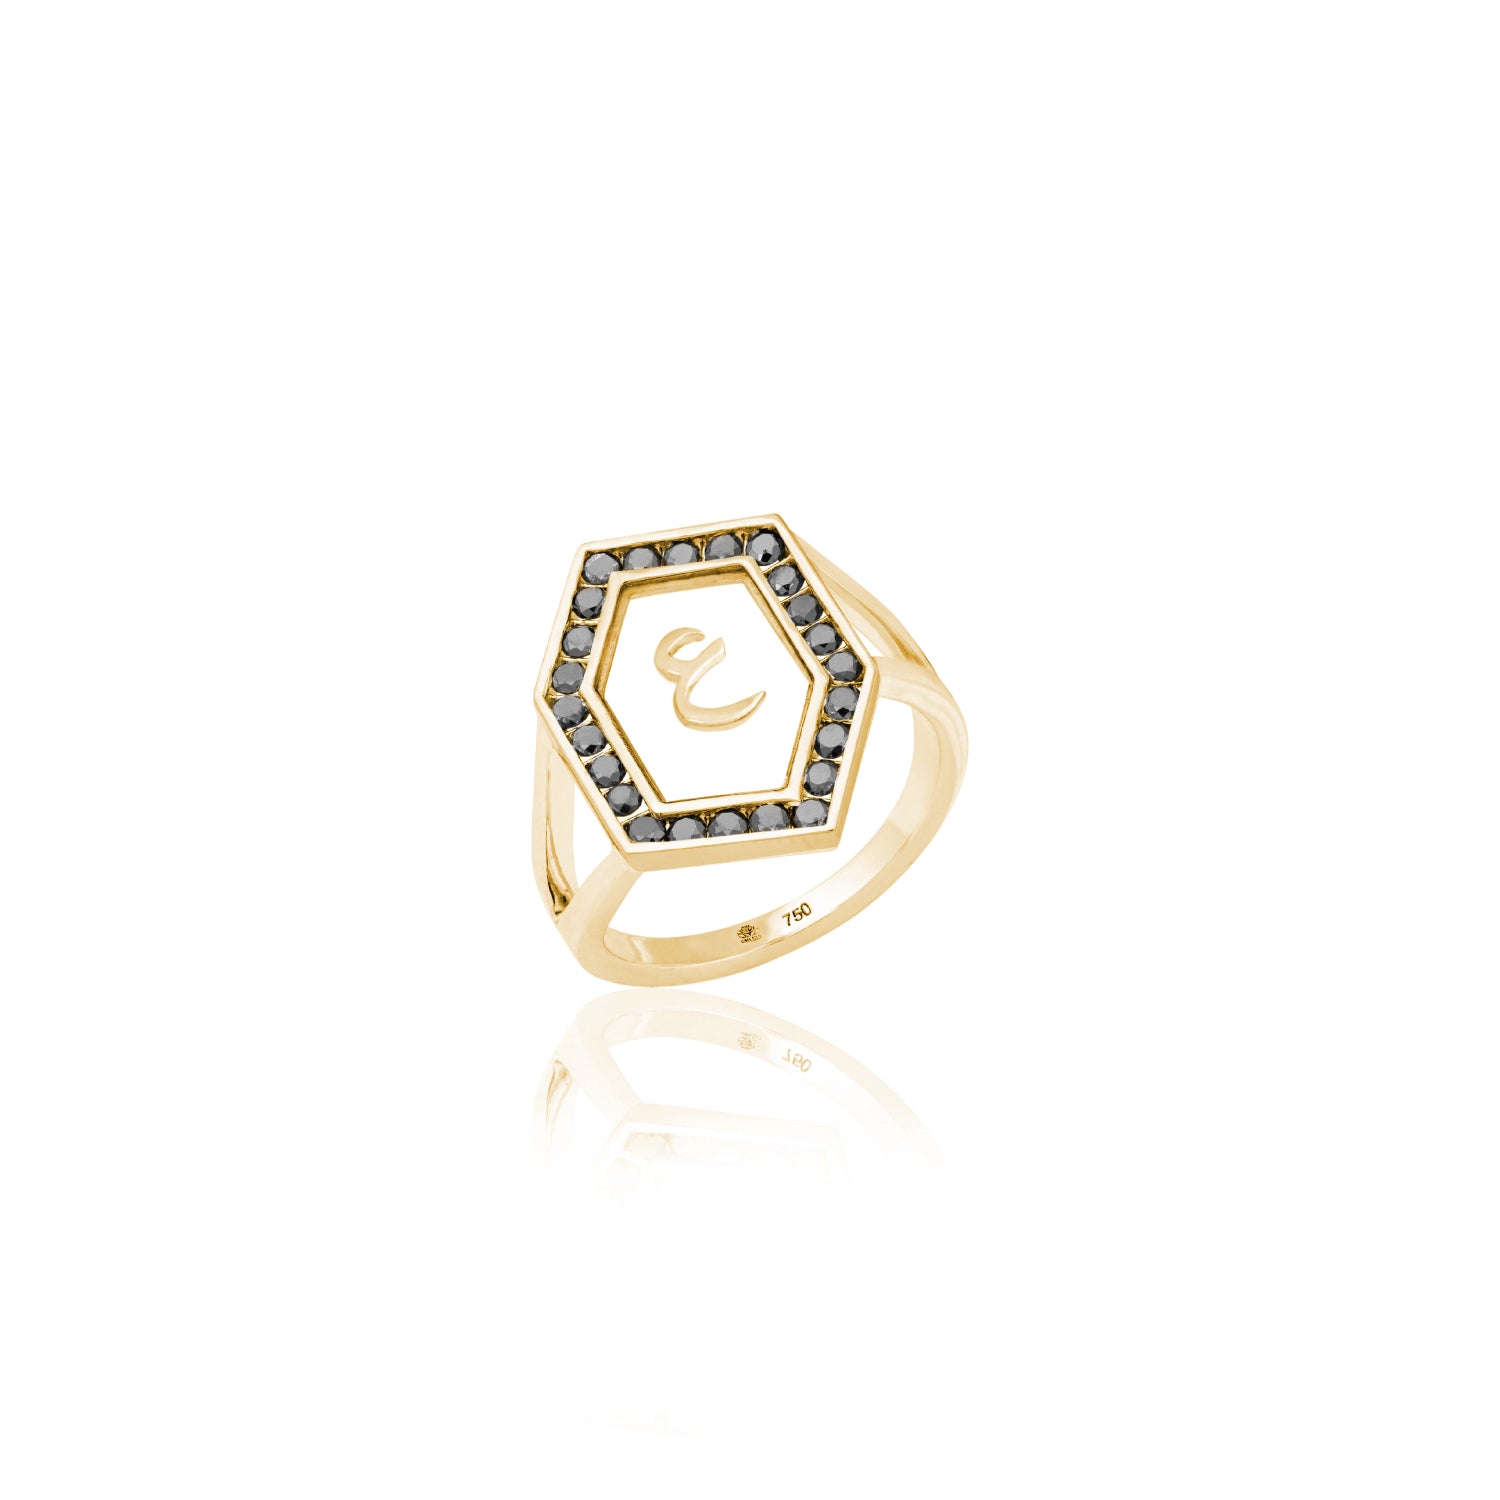 Qamoos 1.0 Letter ع Black Diamond Ring in Yellow Gold